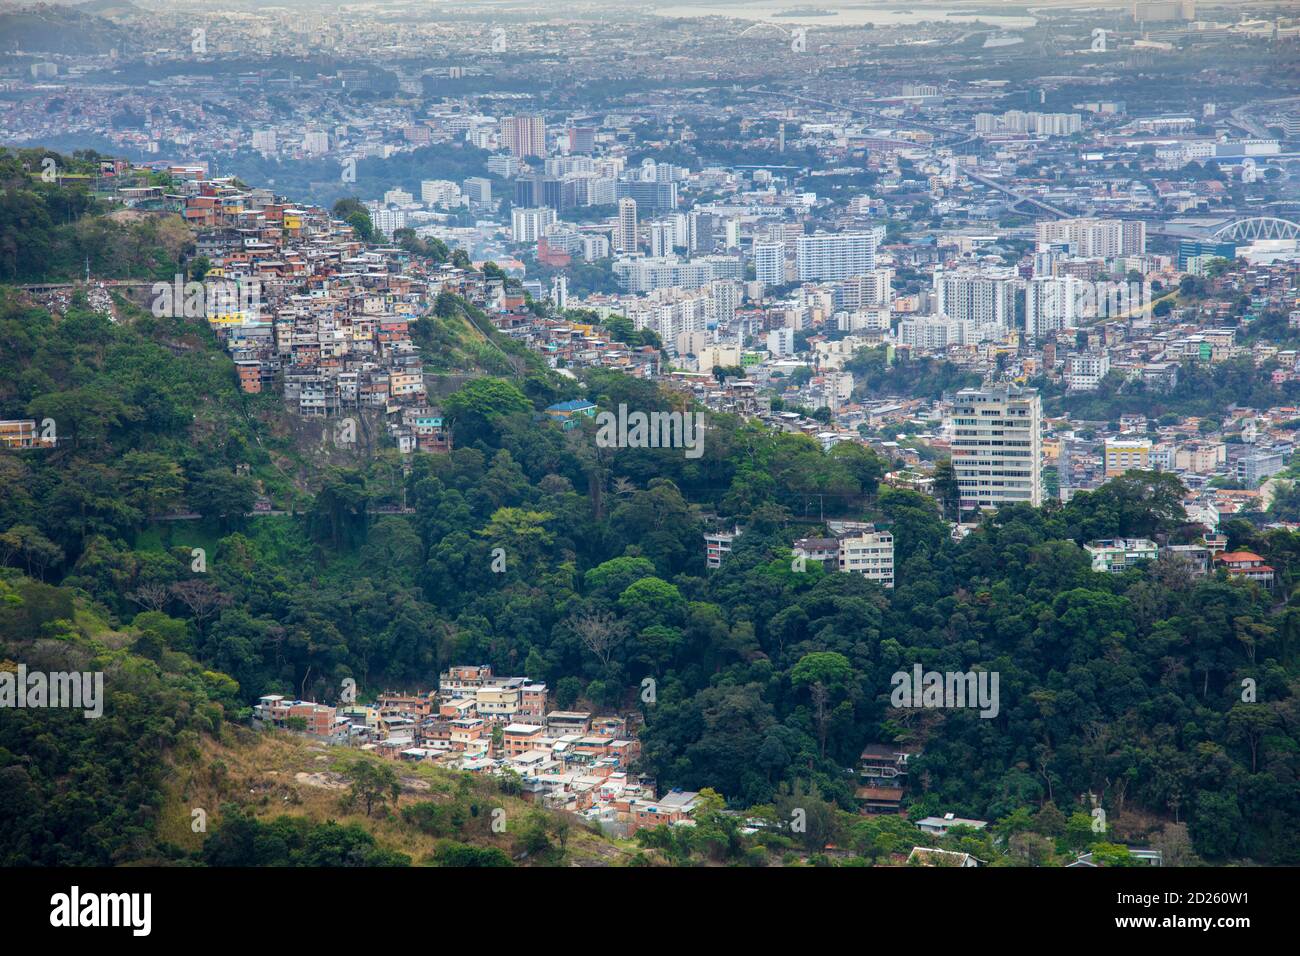 View of downtown Rio and a favela slum community in the neighborhood of Santa Teresa, Rio de Janeiro, Brazil Stock Photo